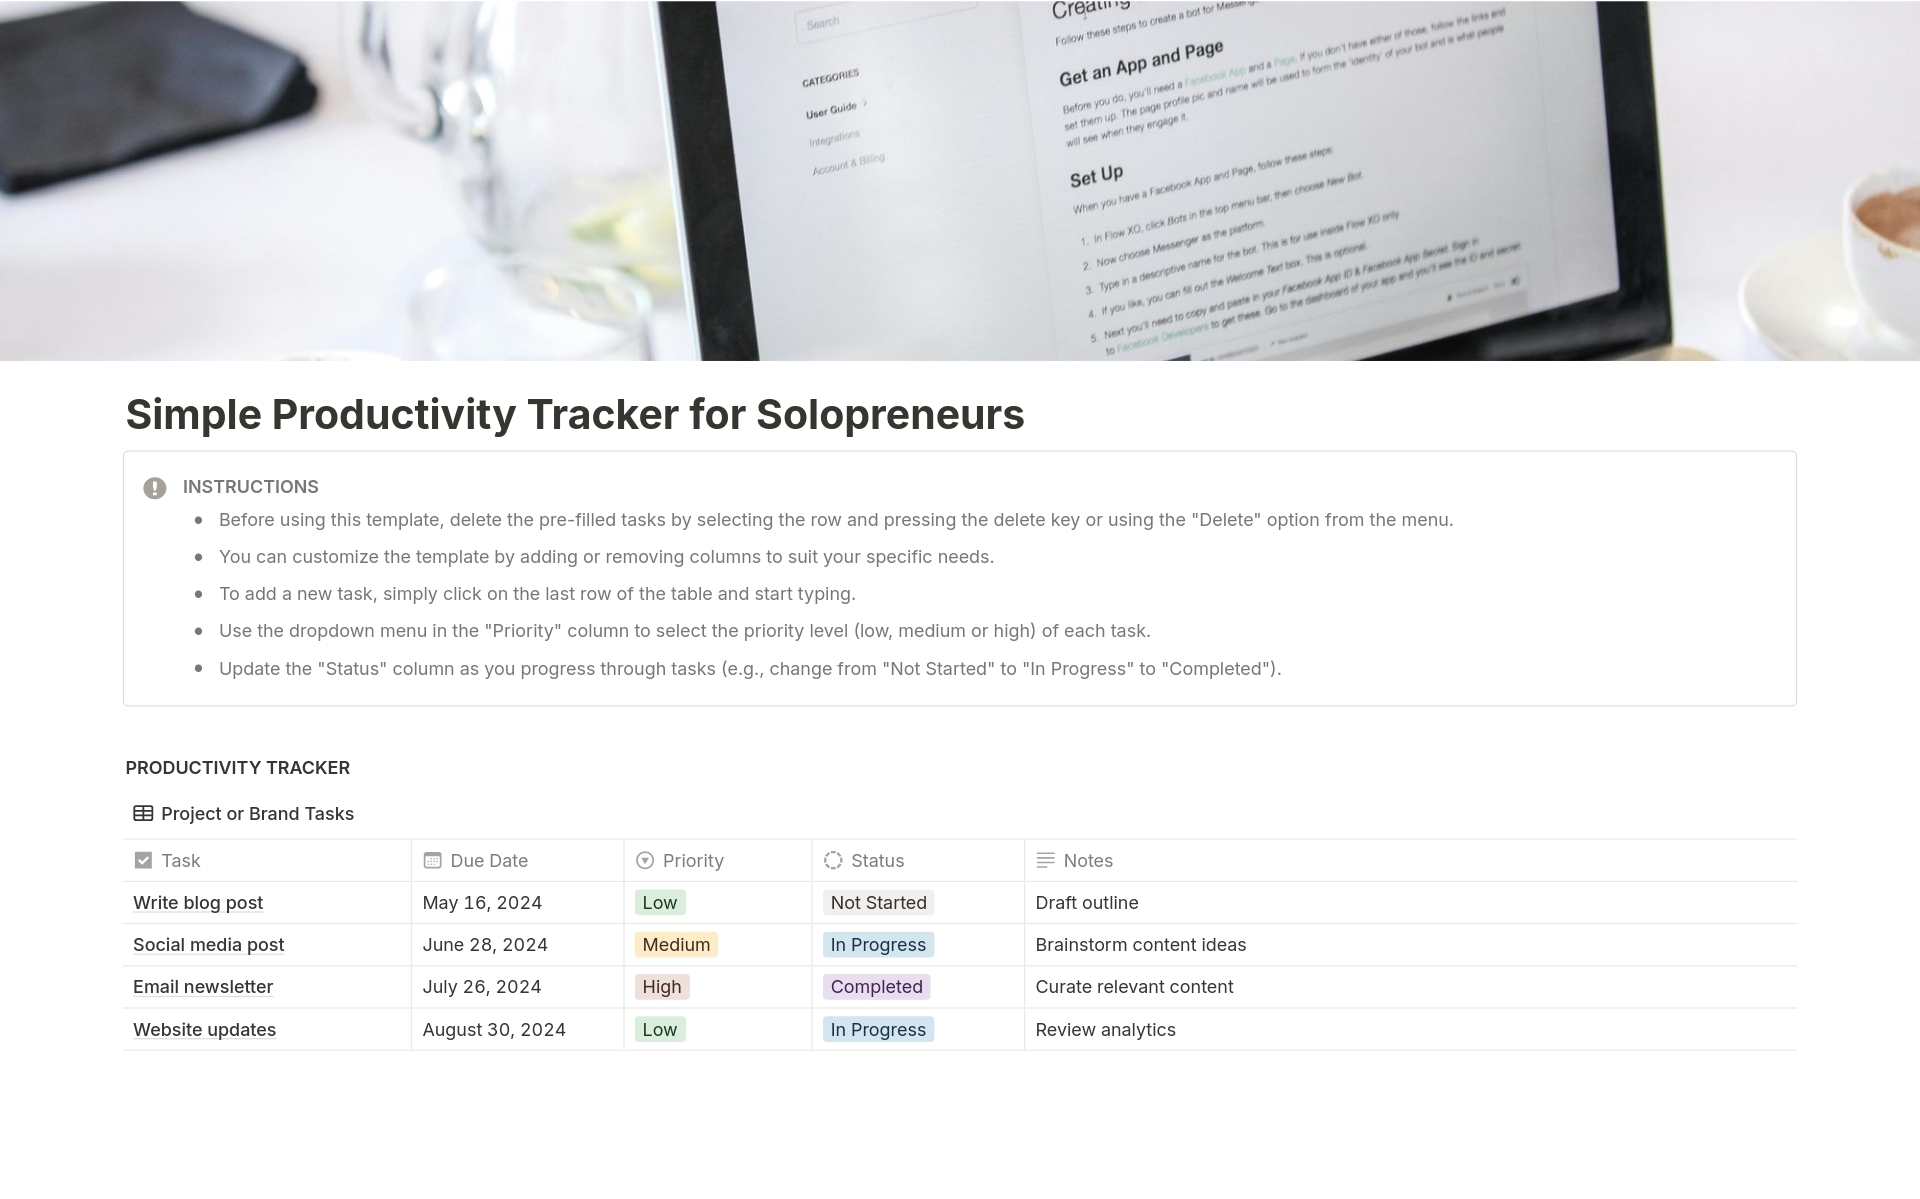 Vista previa de una plantilla para Simple Productivity Tracker for Solopreneurs